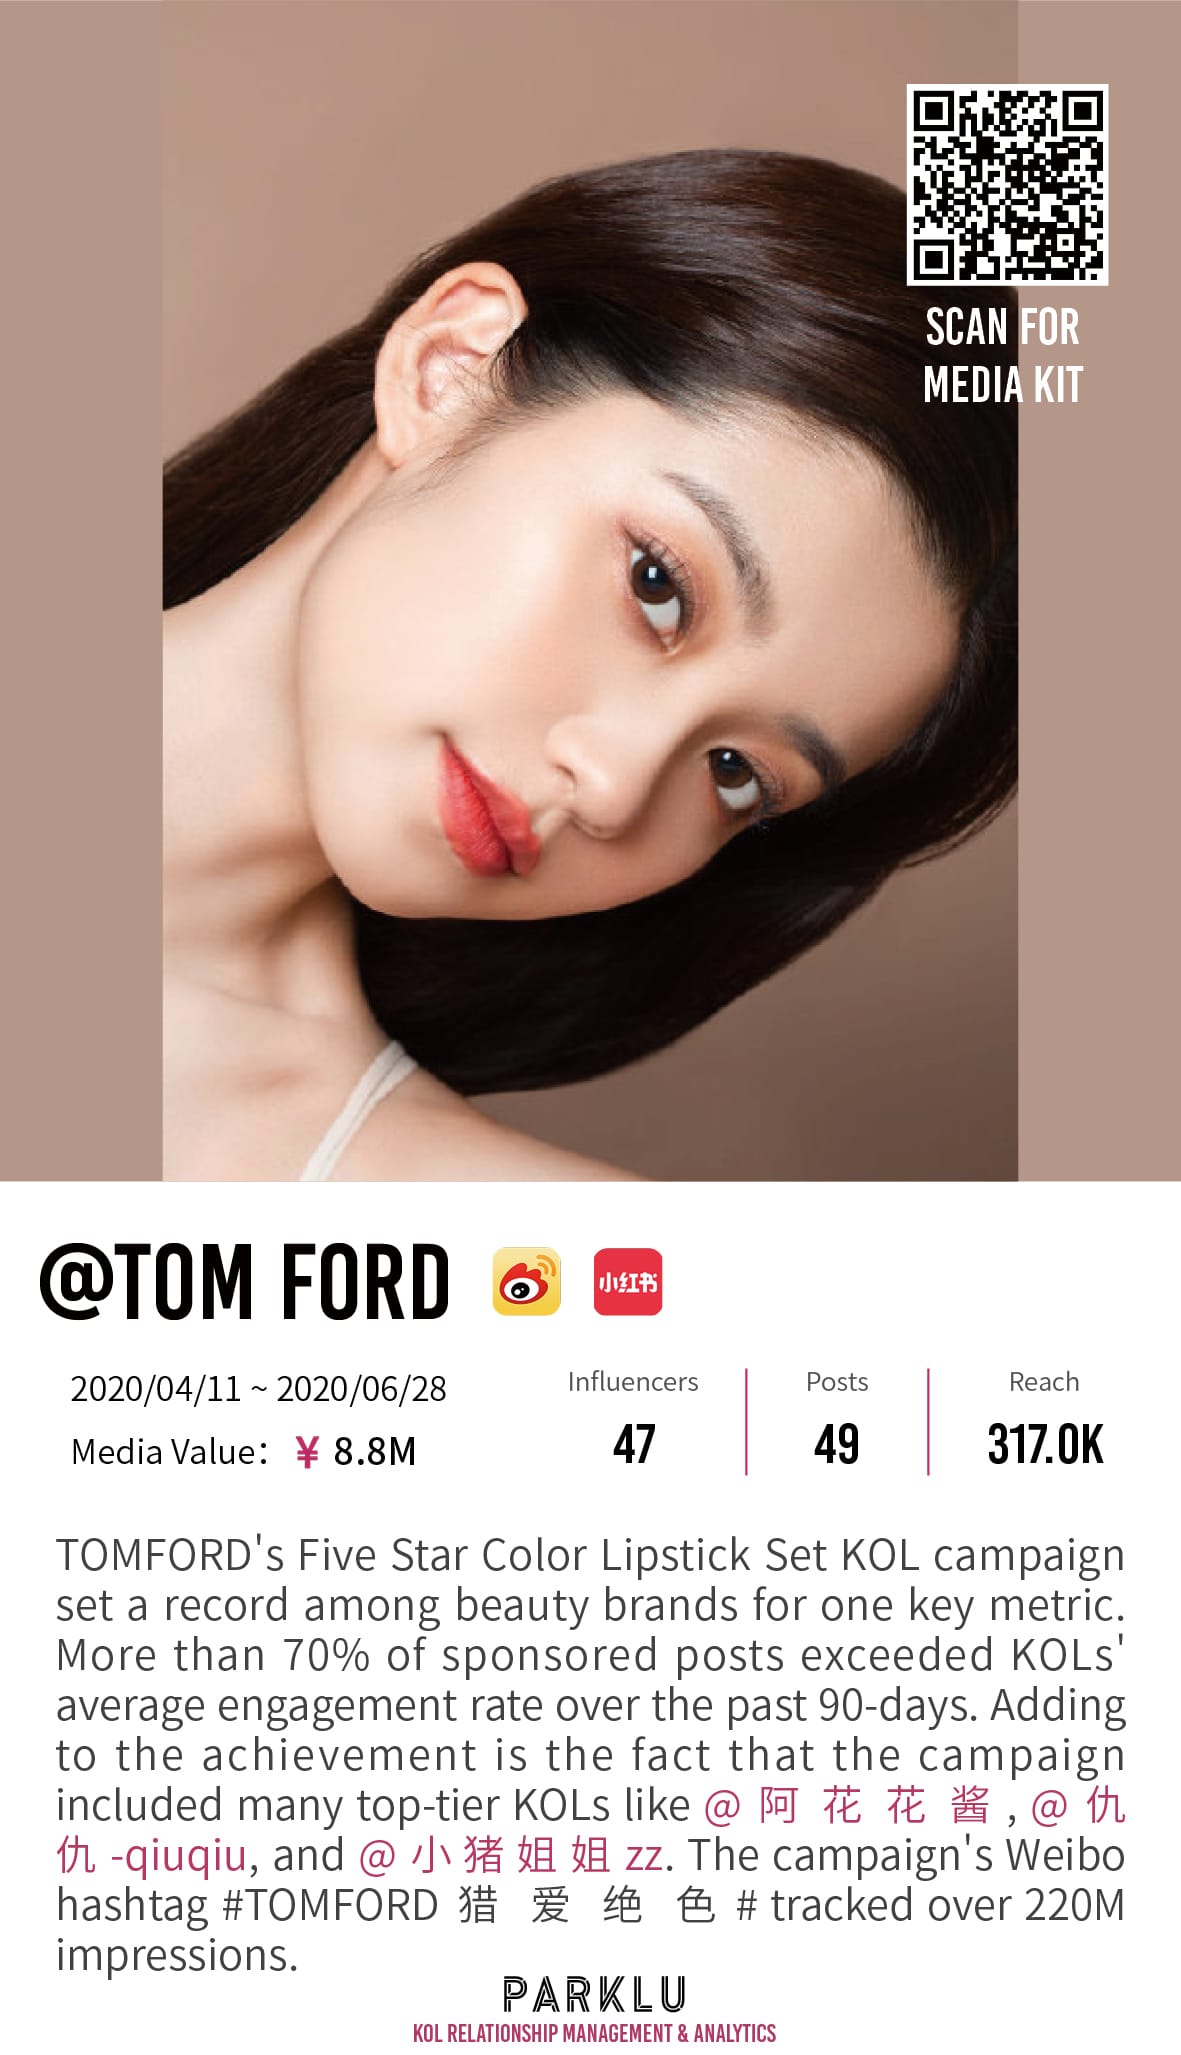 TOMFORD’s Five Star Color Lipstick